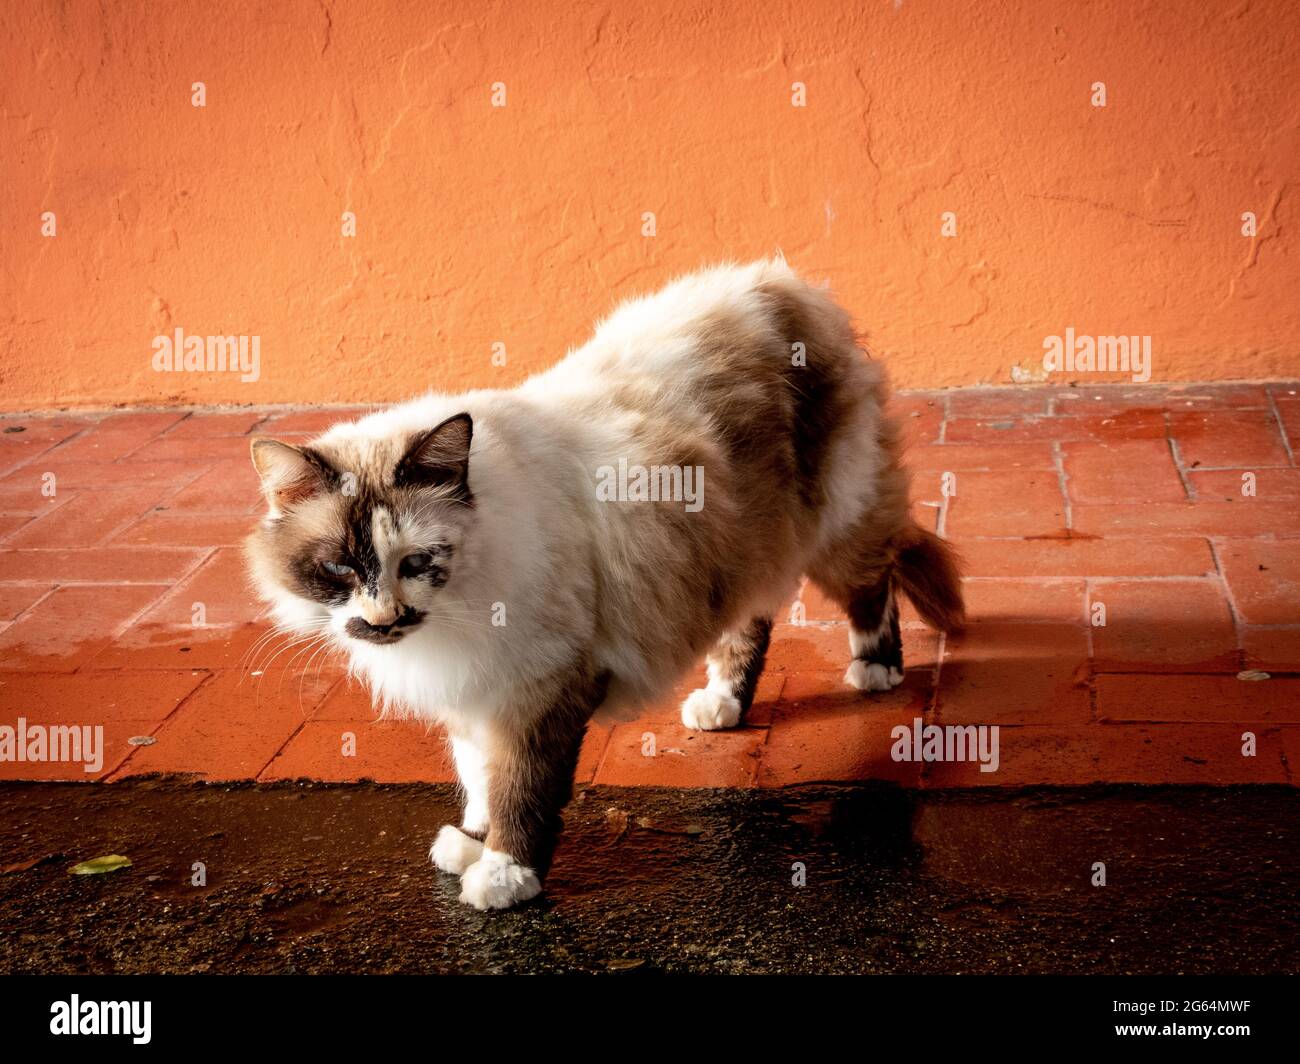 Agouti fur colour cat Stock Photo